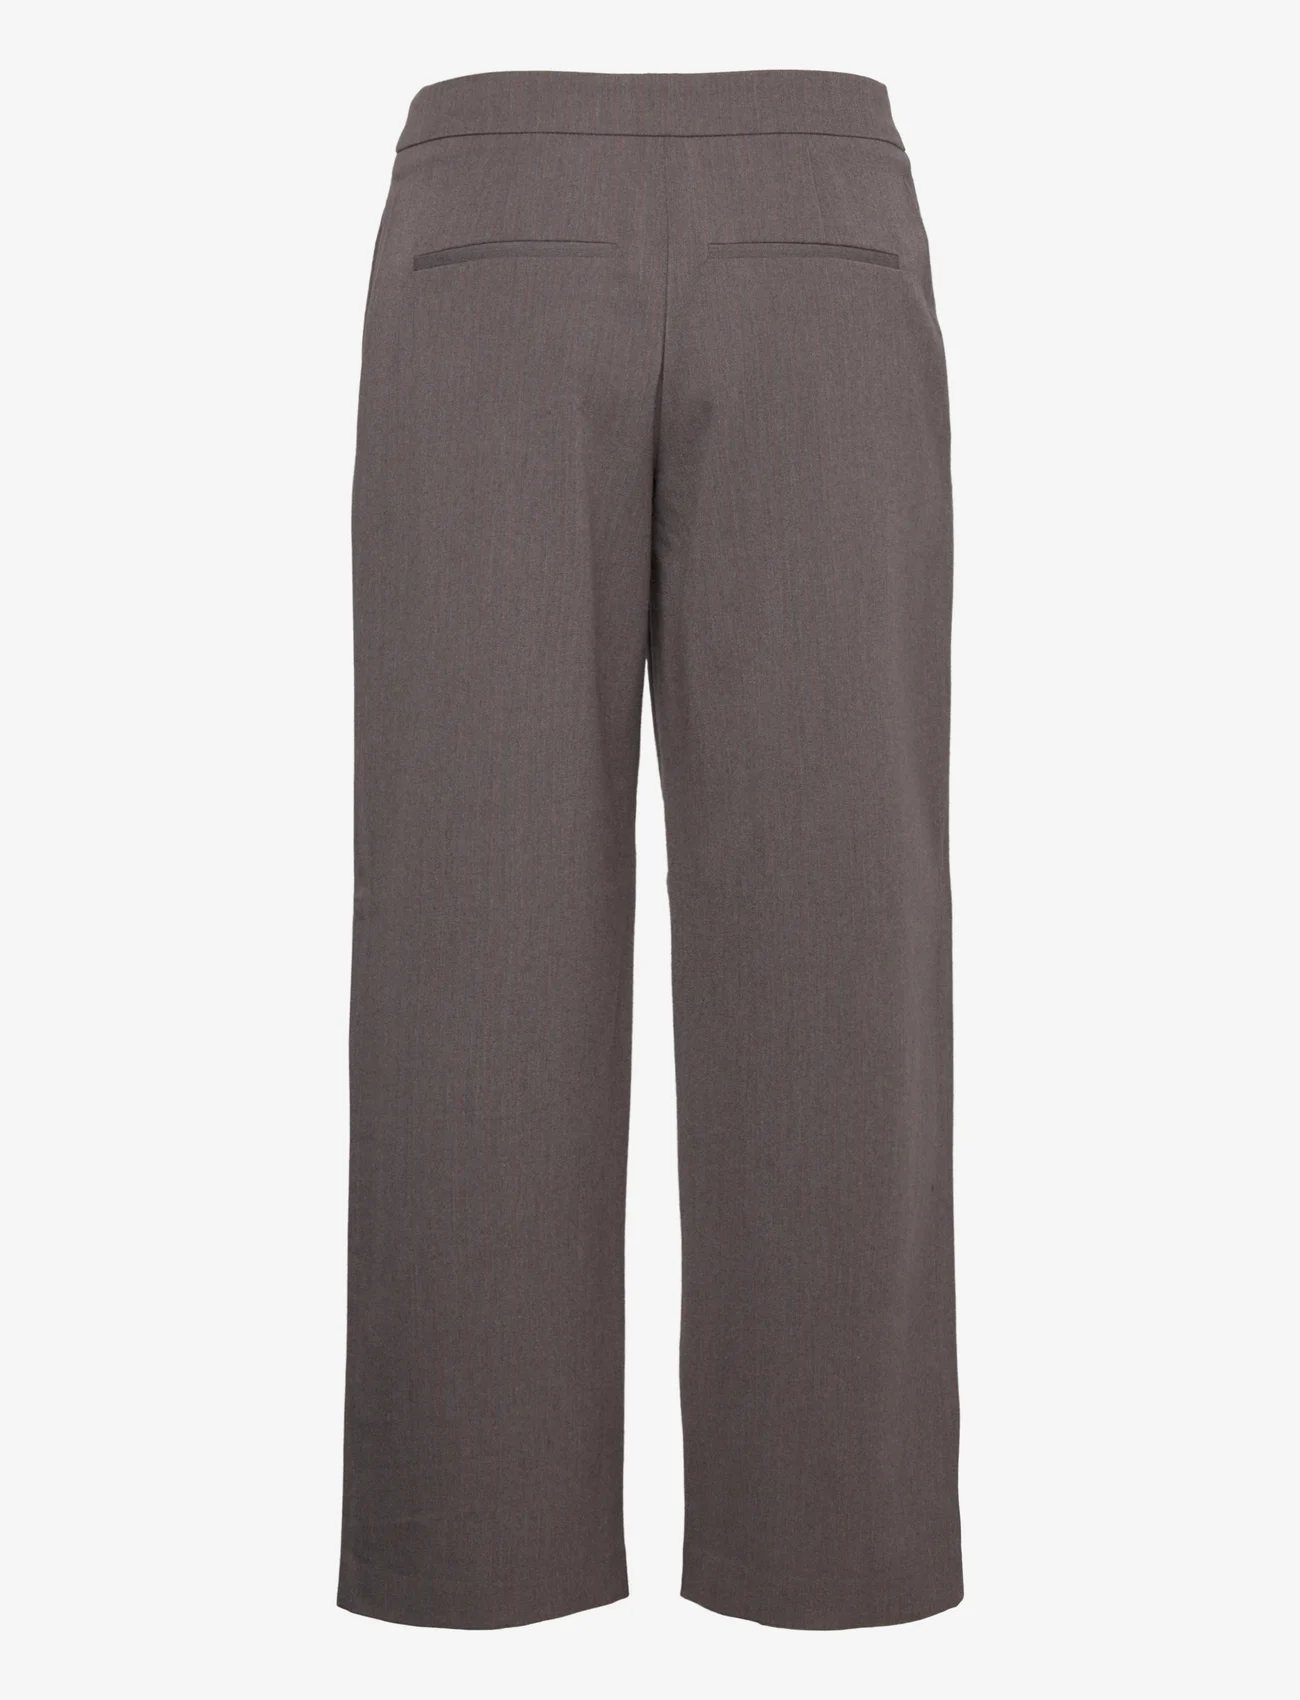 MSCH Copenhagen - MSCHDyanna Pants STP - spodnie proste - dark brown stp - 1